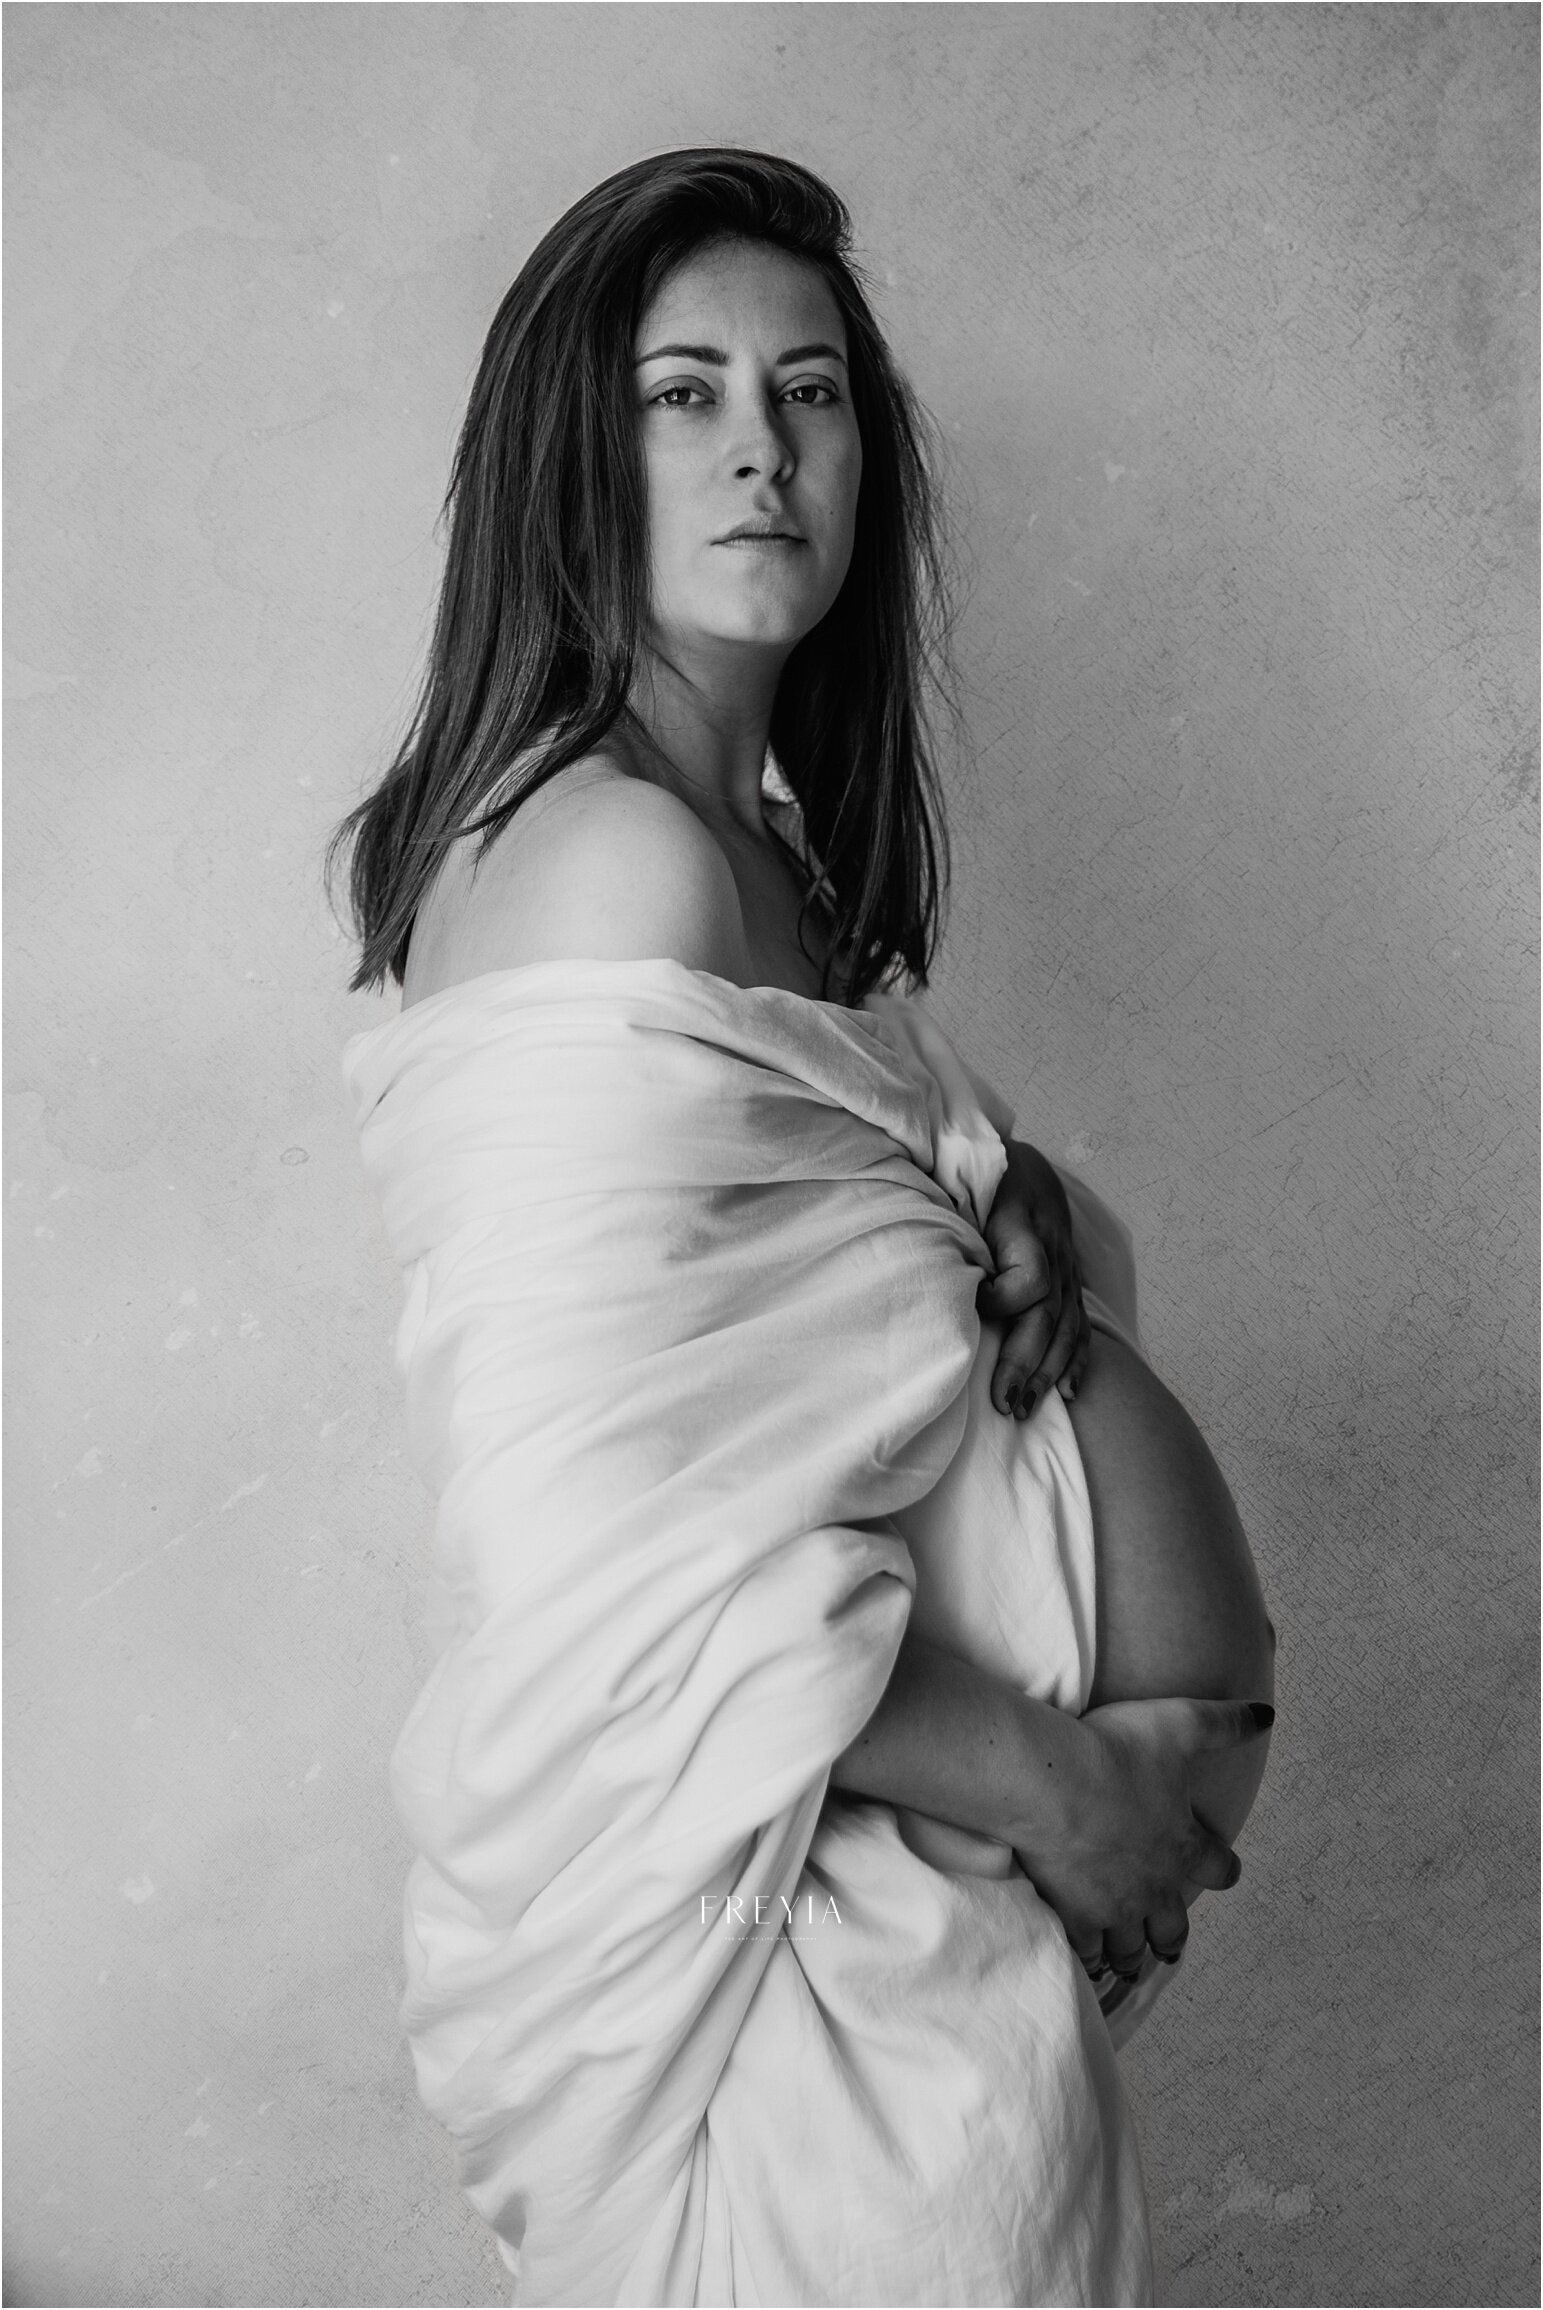 J + D |  session grossesse SÉANCE PHOTO femme enceinte future maman maternité |  PHOTOGRAPHE bebe grossesse frejus cote dazur nice | FREYIA photography | photographe | nouveau-né bébé maternité (Copy)